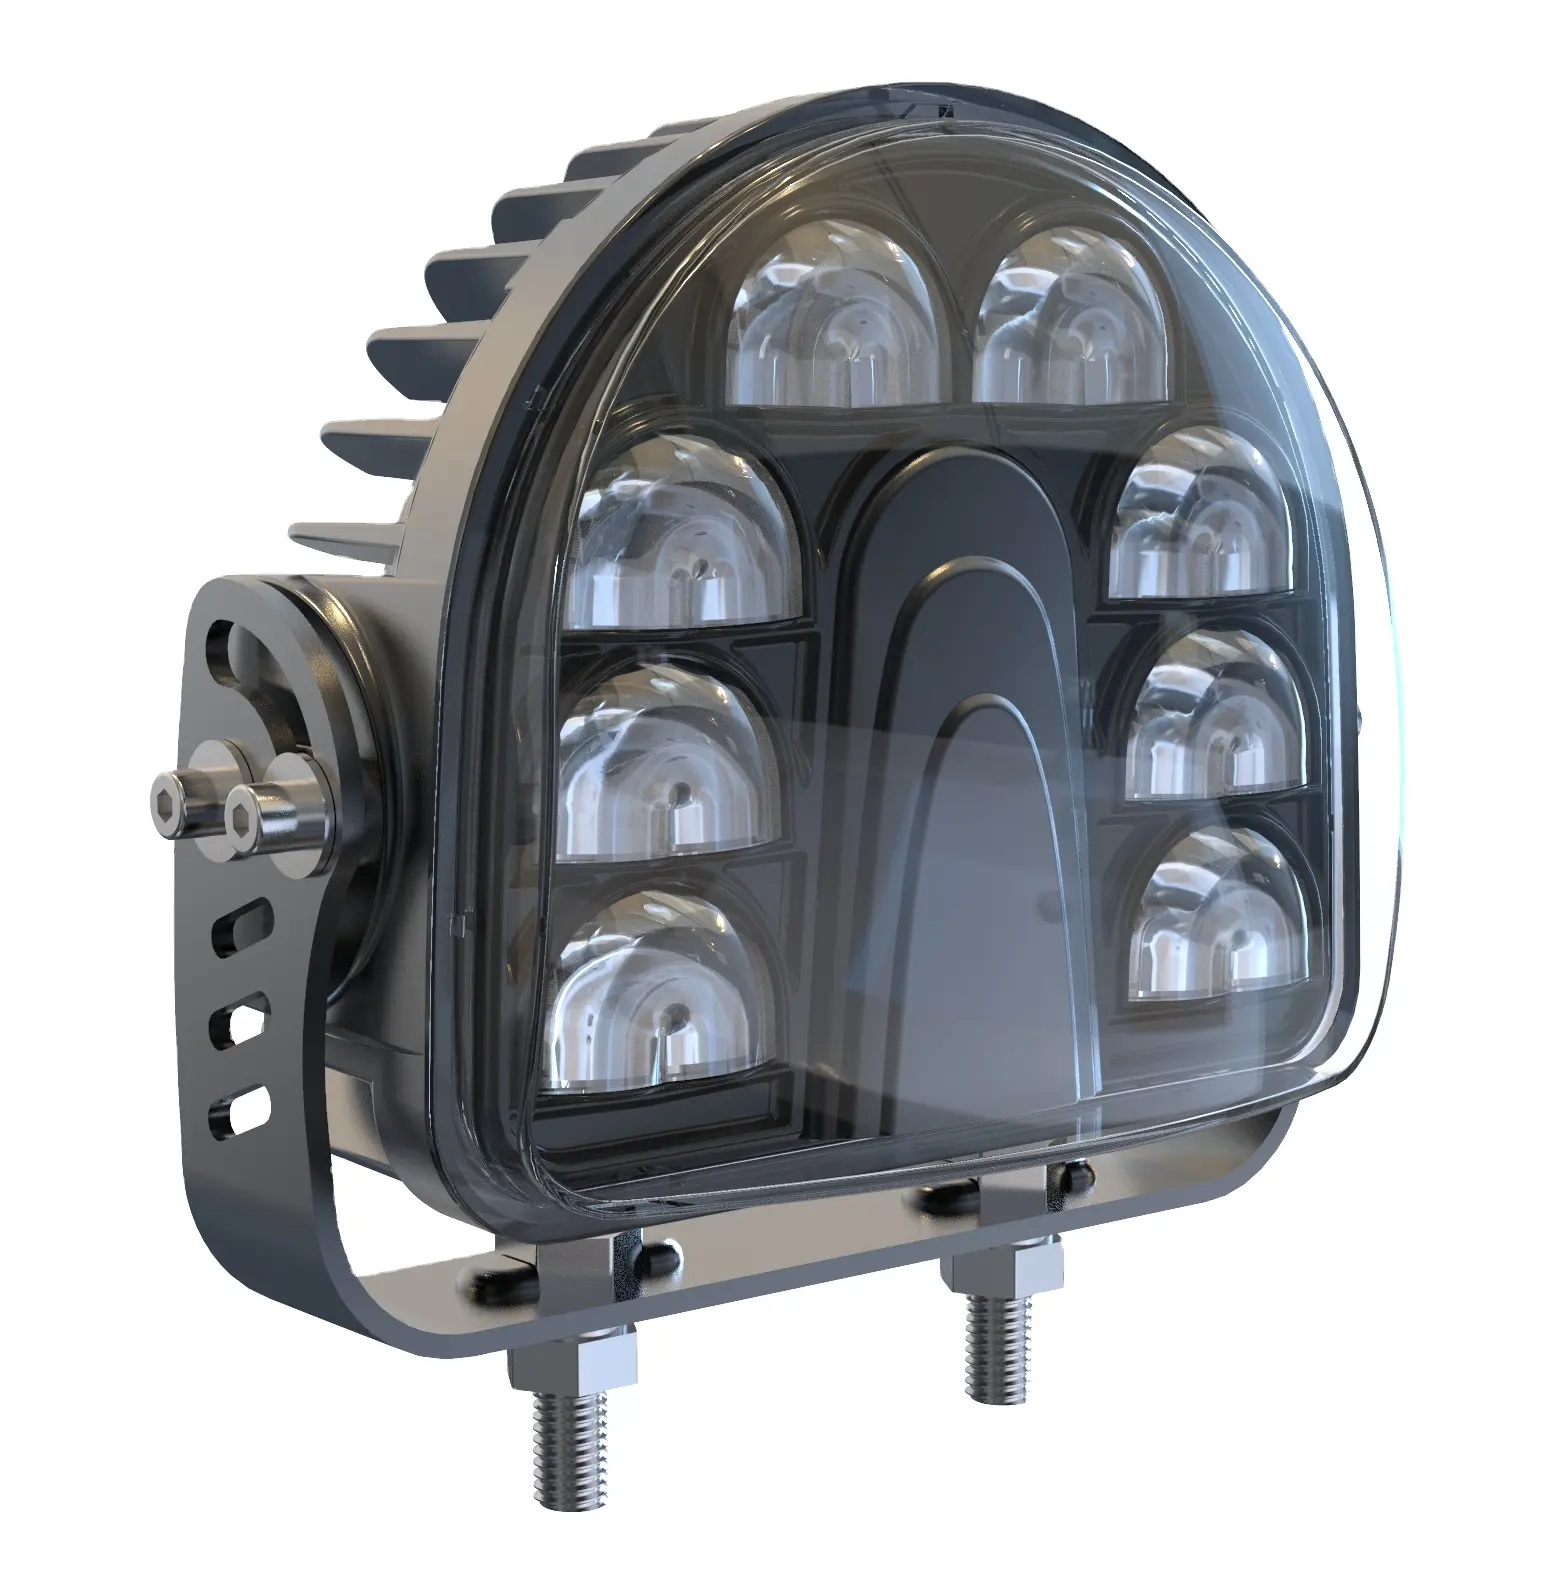 6W 12V/24V مصباح عمل LED لرافعة شوكية الأزرق LED ضوء تحذير رافعة شوكية بقعة ضوء